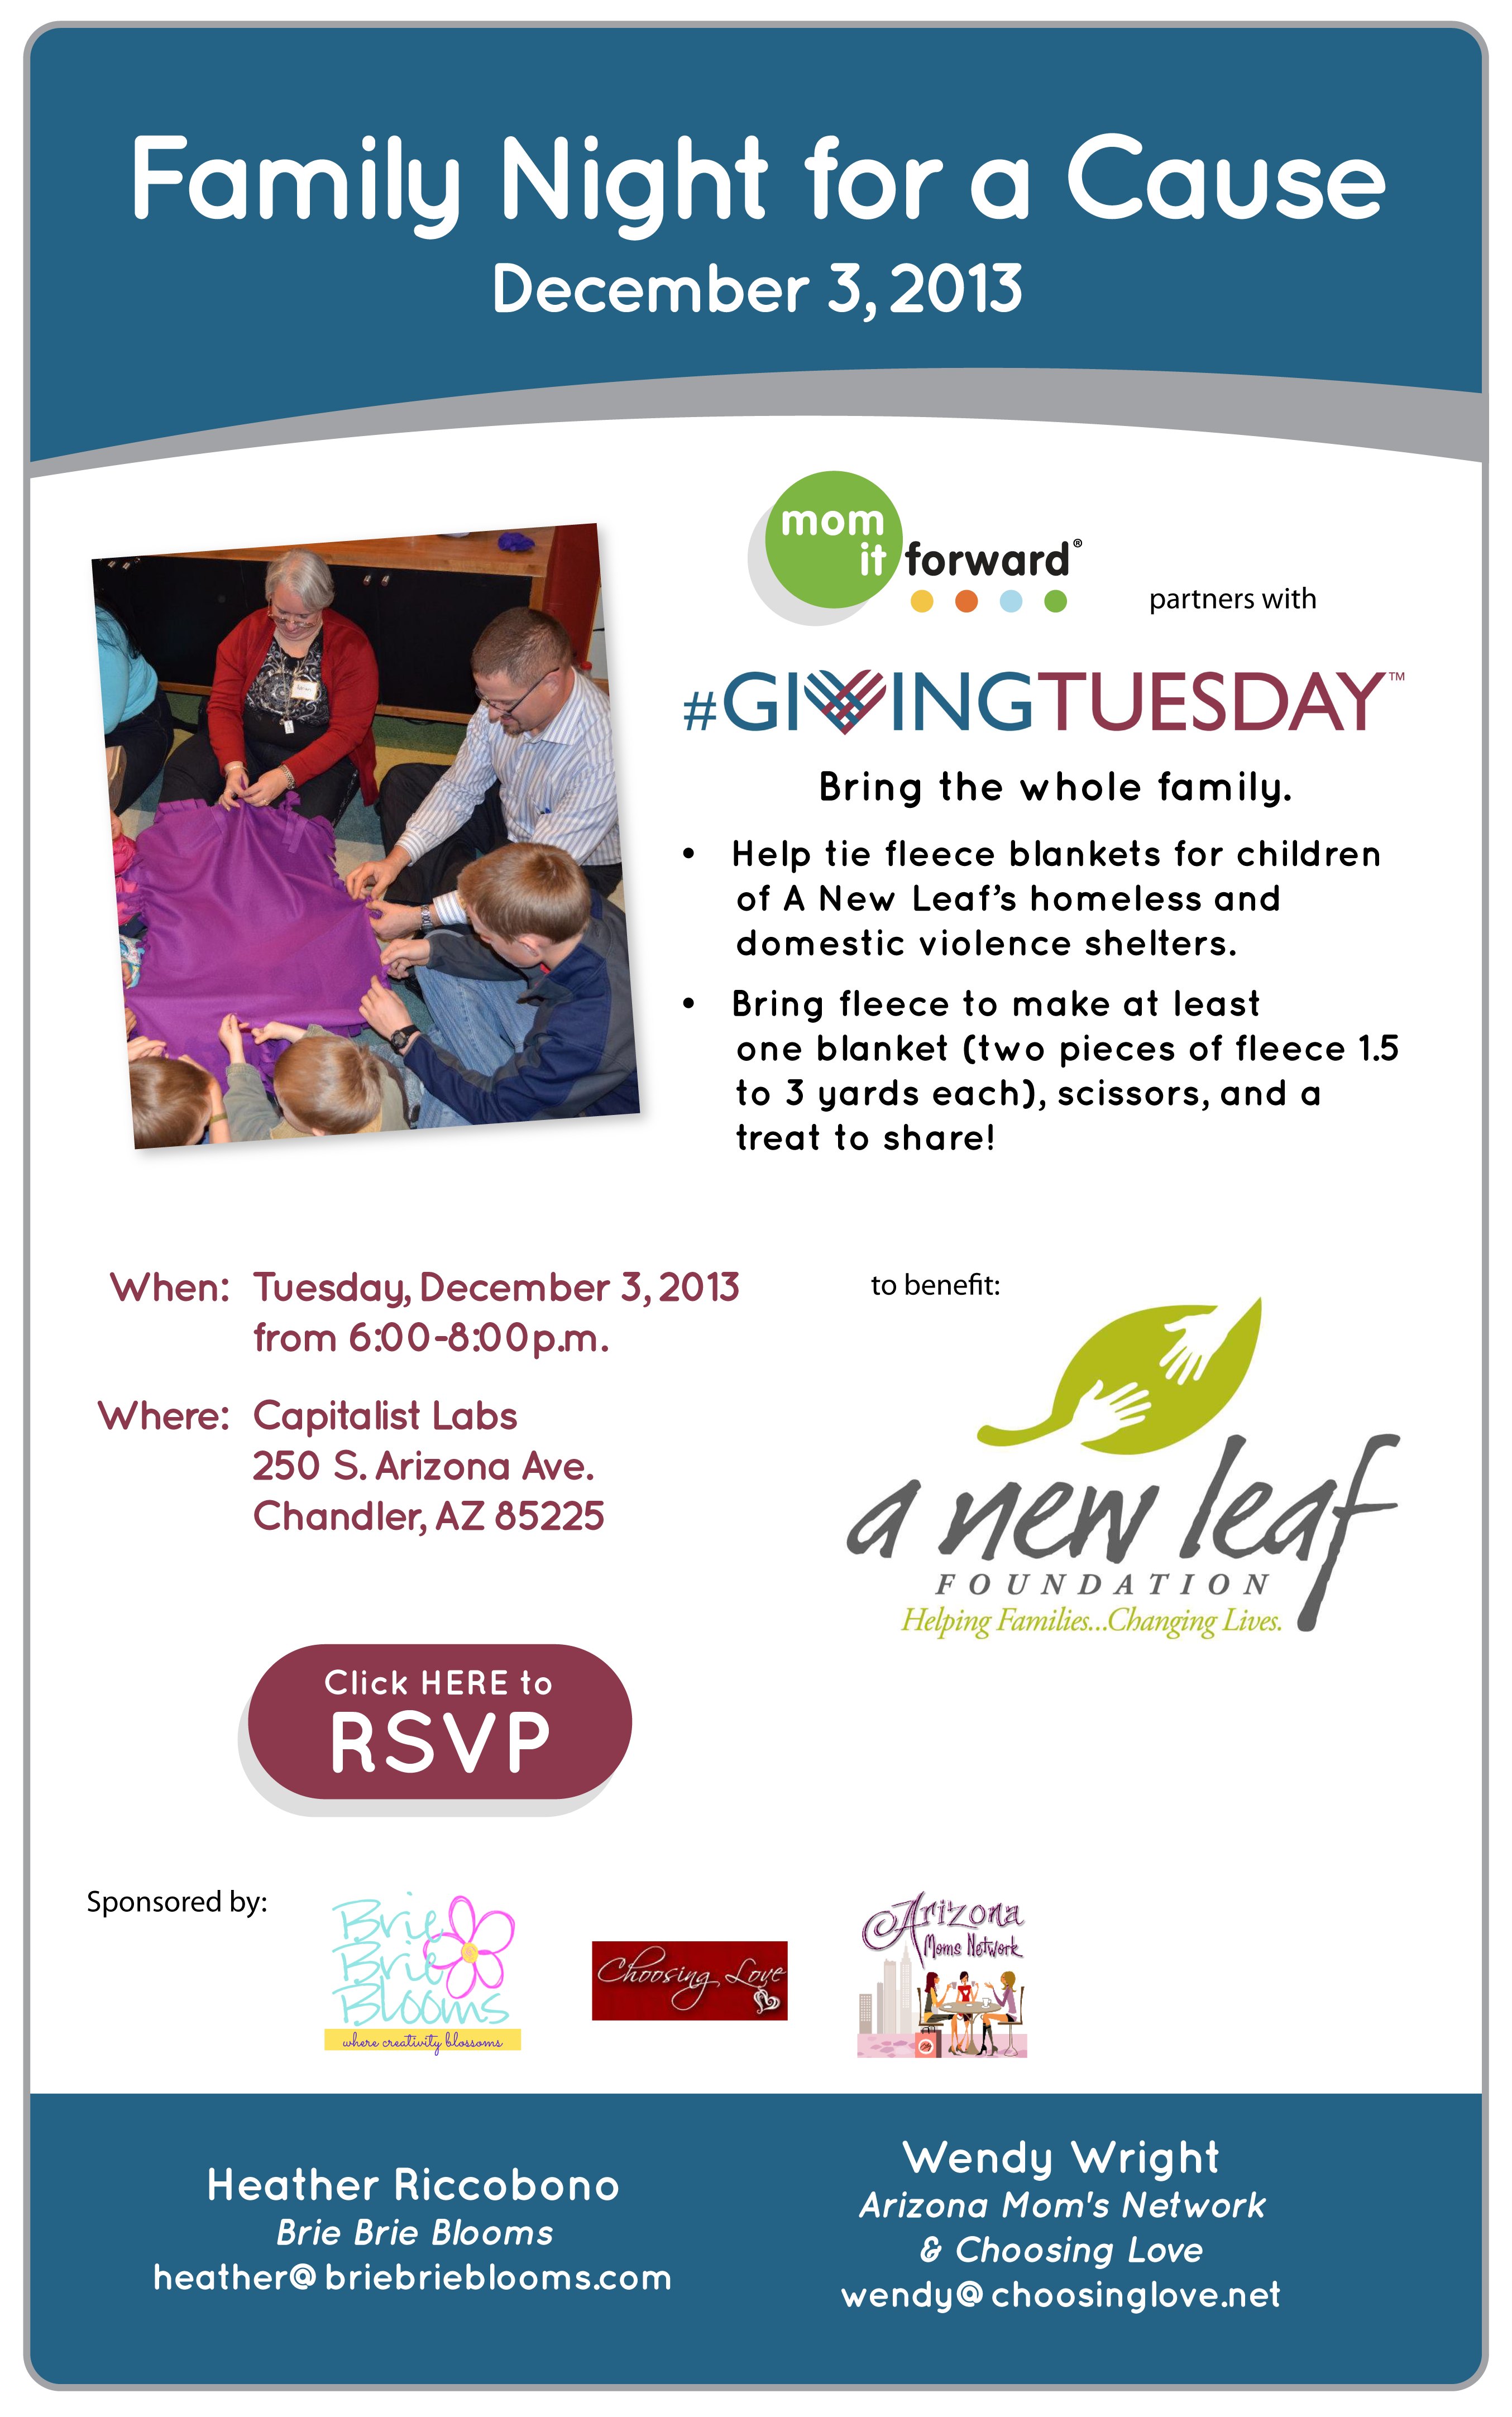 Arizona Giving Tuesday event, December 2013